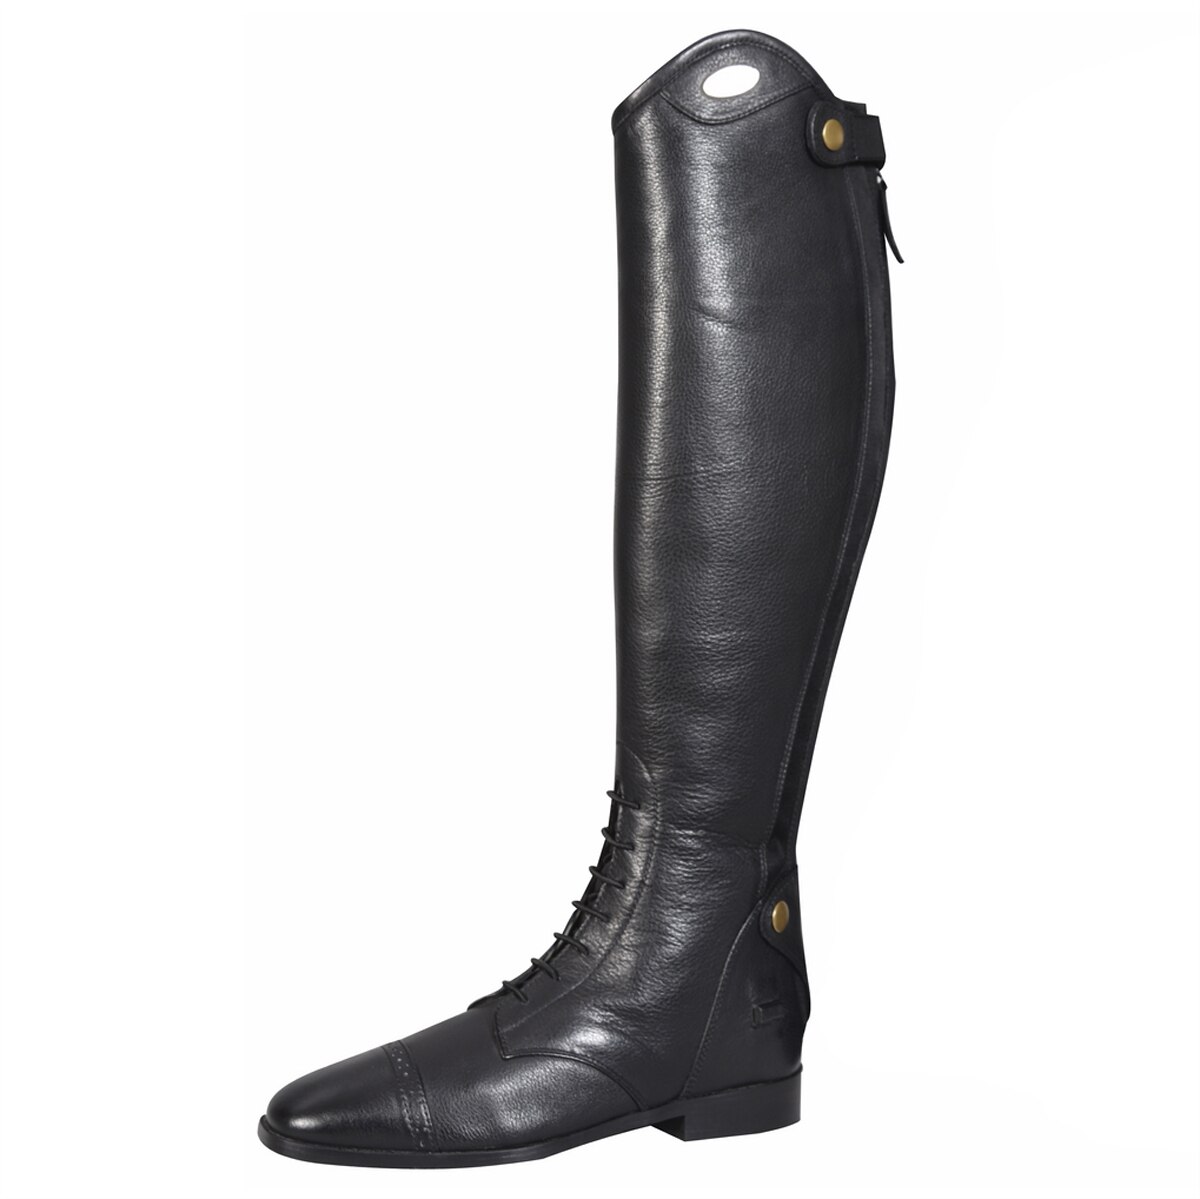 Tuffrider Regal X-Tall Field Riding Boots Ladies Ultra-Soft Leather Square Toe 